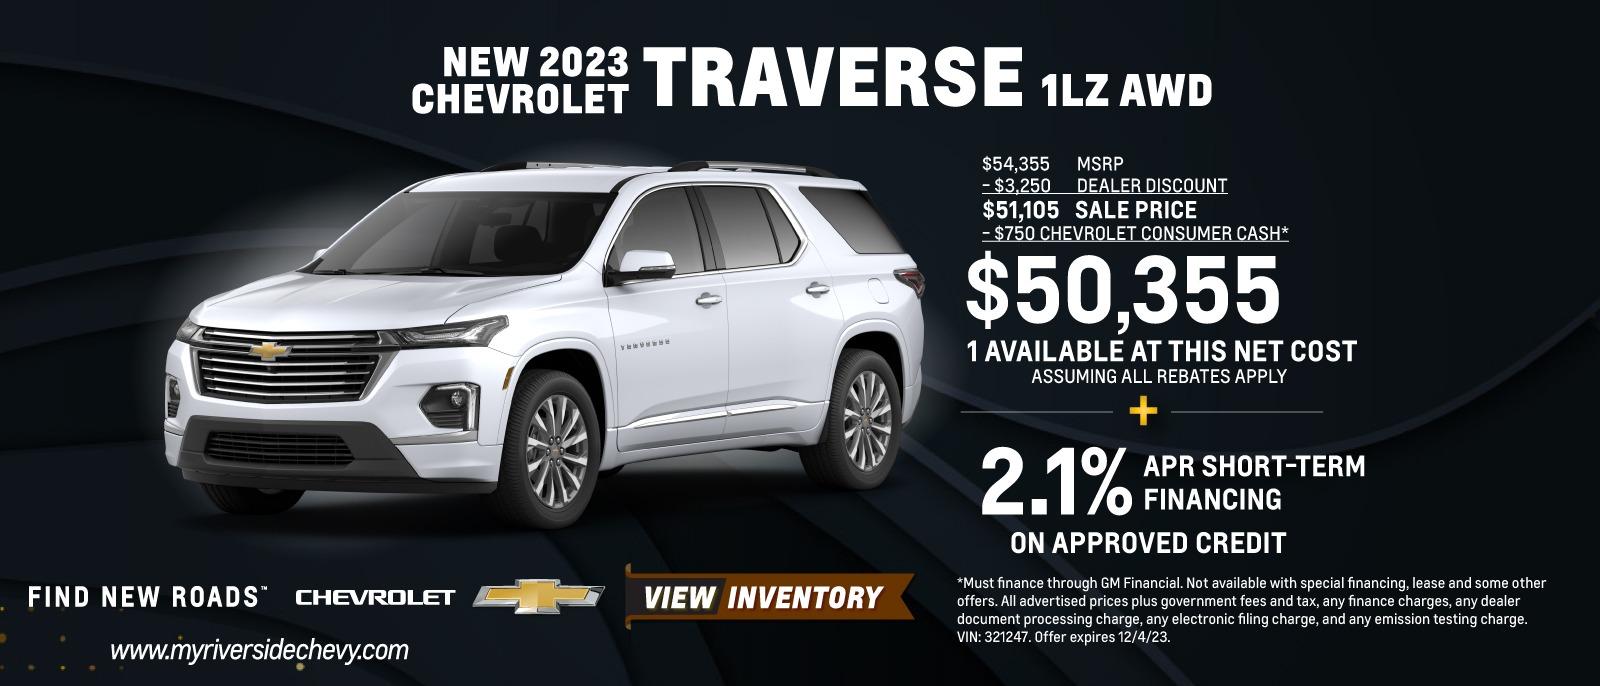 Get a New 2023 Chevrolet Traverse 1LT FWD at  $35,895 Plus 2.1% APR